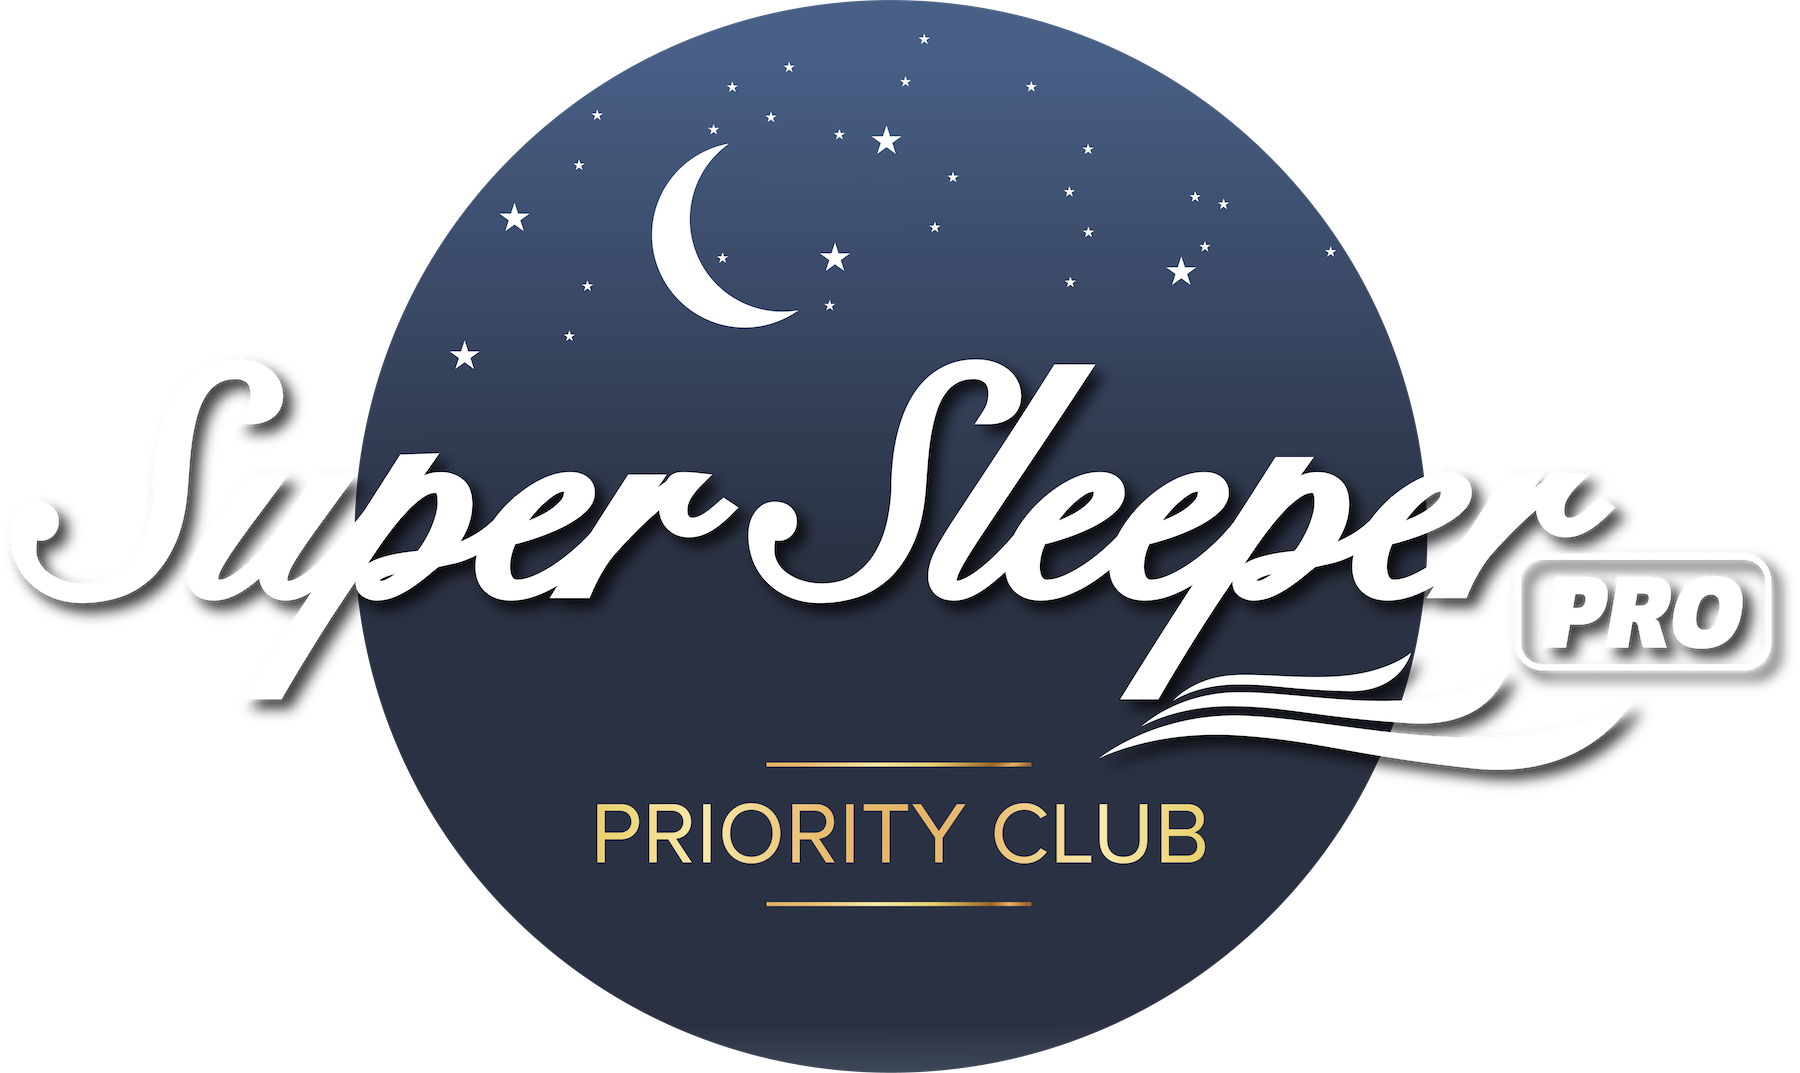 Super Sleeper Pro - Priority club